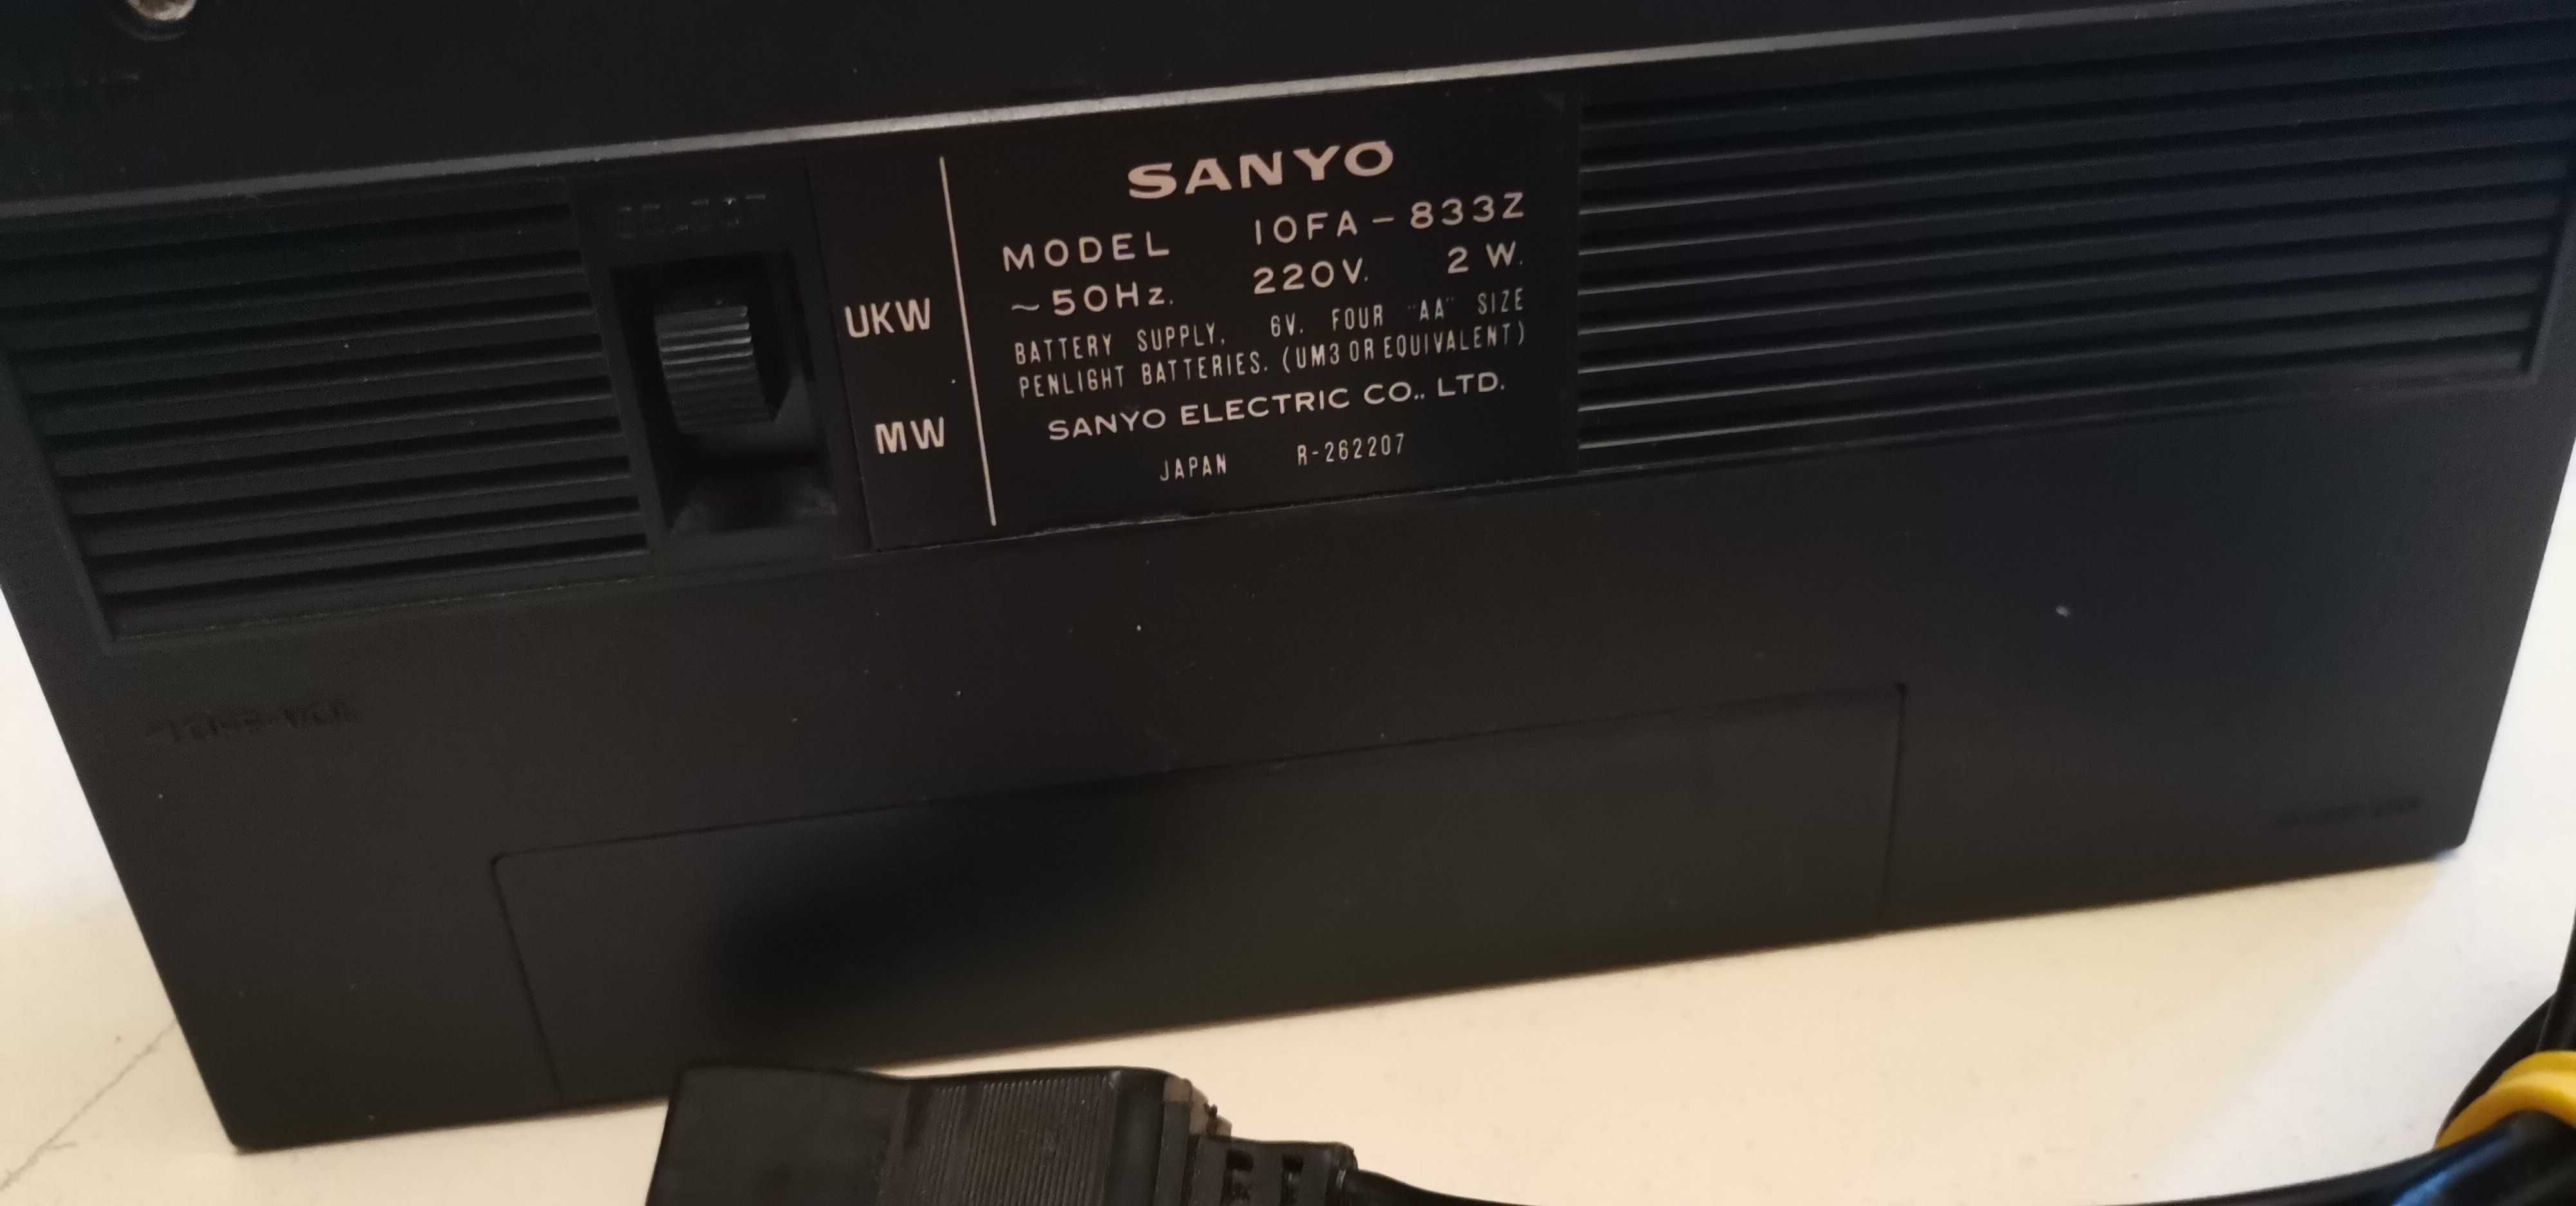 Radio vintage Saniyo, model 10FA-8332Z